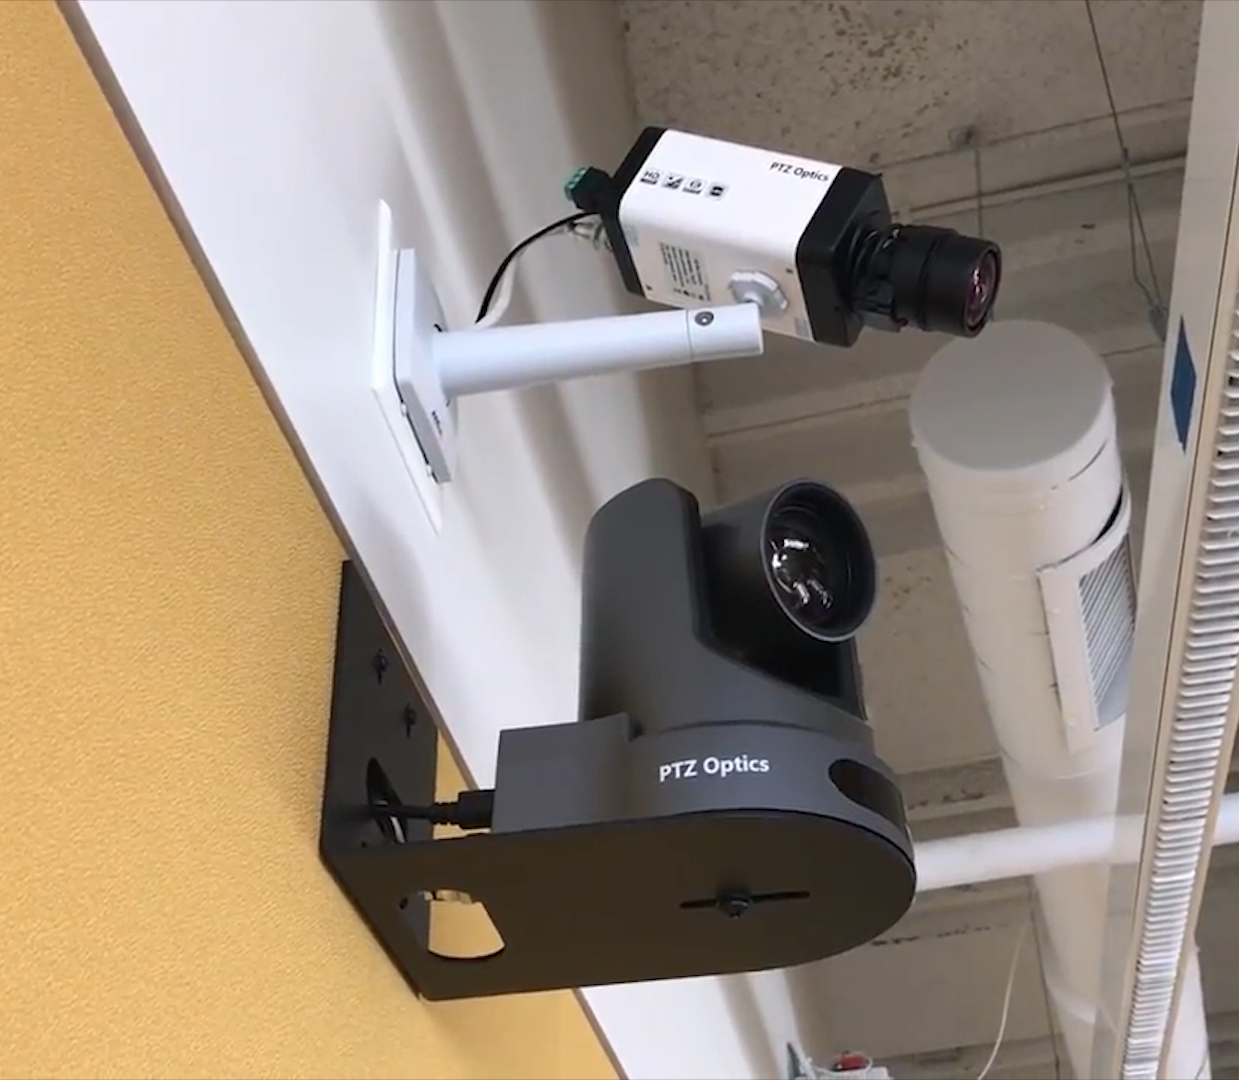 PTZOptics: A manufacturer of robotic pan, tilt, zoom camera solutions